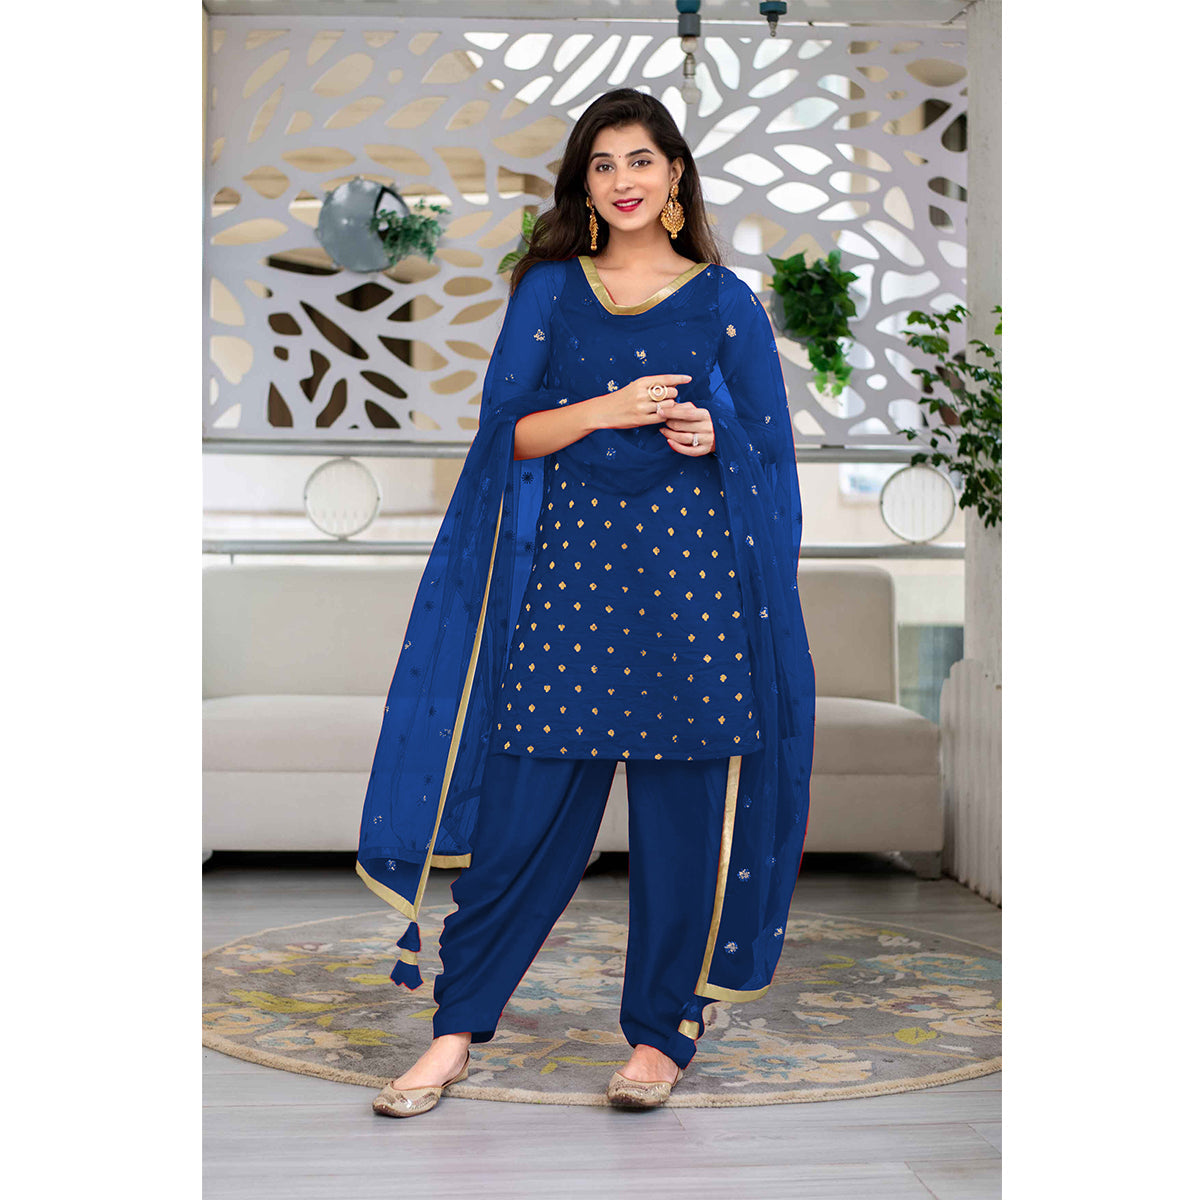 Shafnufab Women's Georgette UnStitched Dress Material Blue Salwar Suit